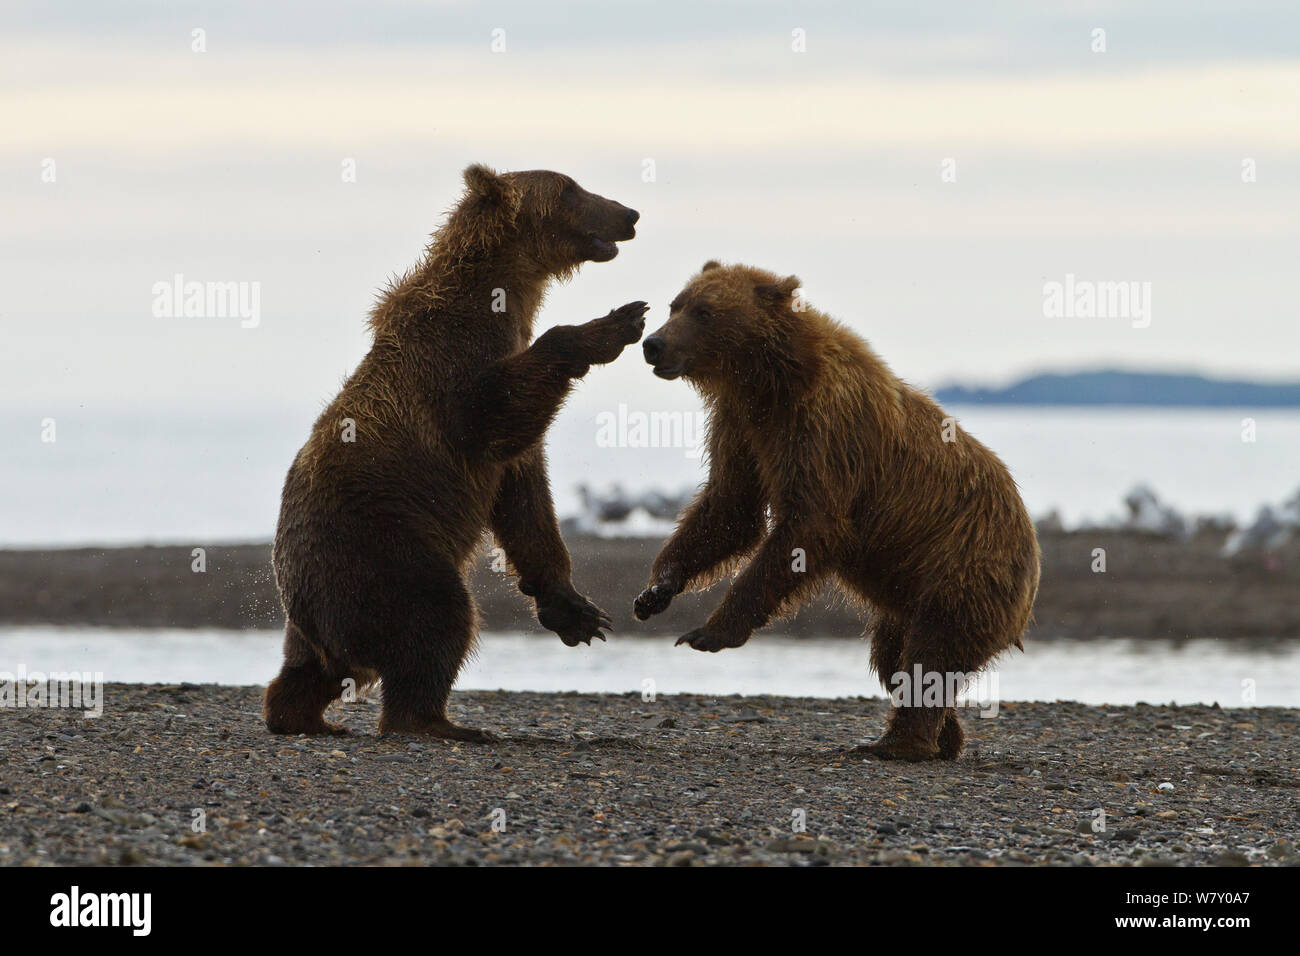 Grizzlybären (Ursus arctos Horribilis) kämpfen am Strand, Katmai National Park, Alaska, USA, August. Stockfoto